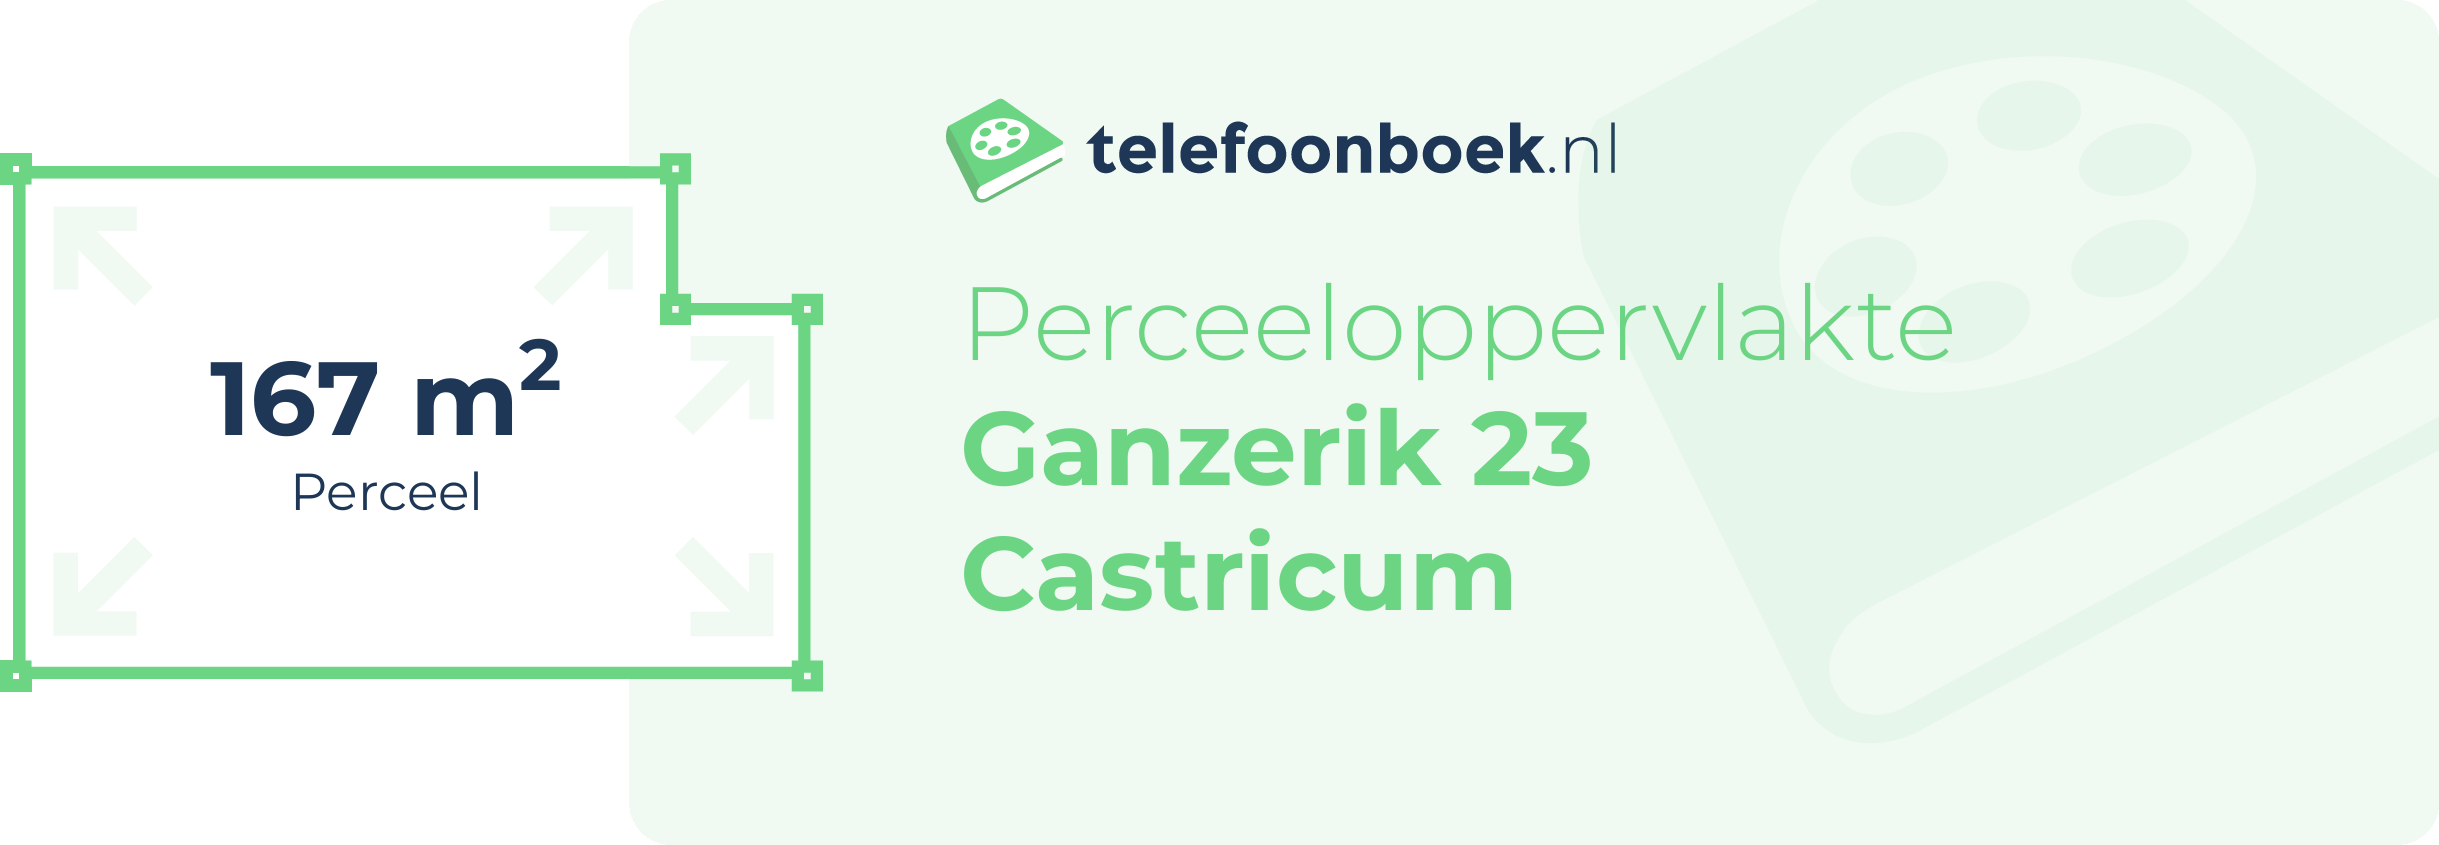 Perceeloppervlakte Ganzerik 23 Castricum